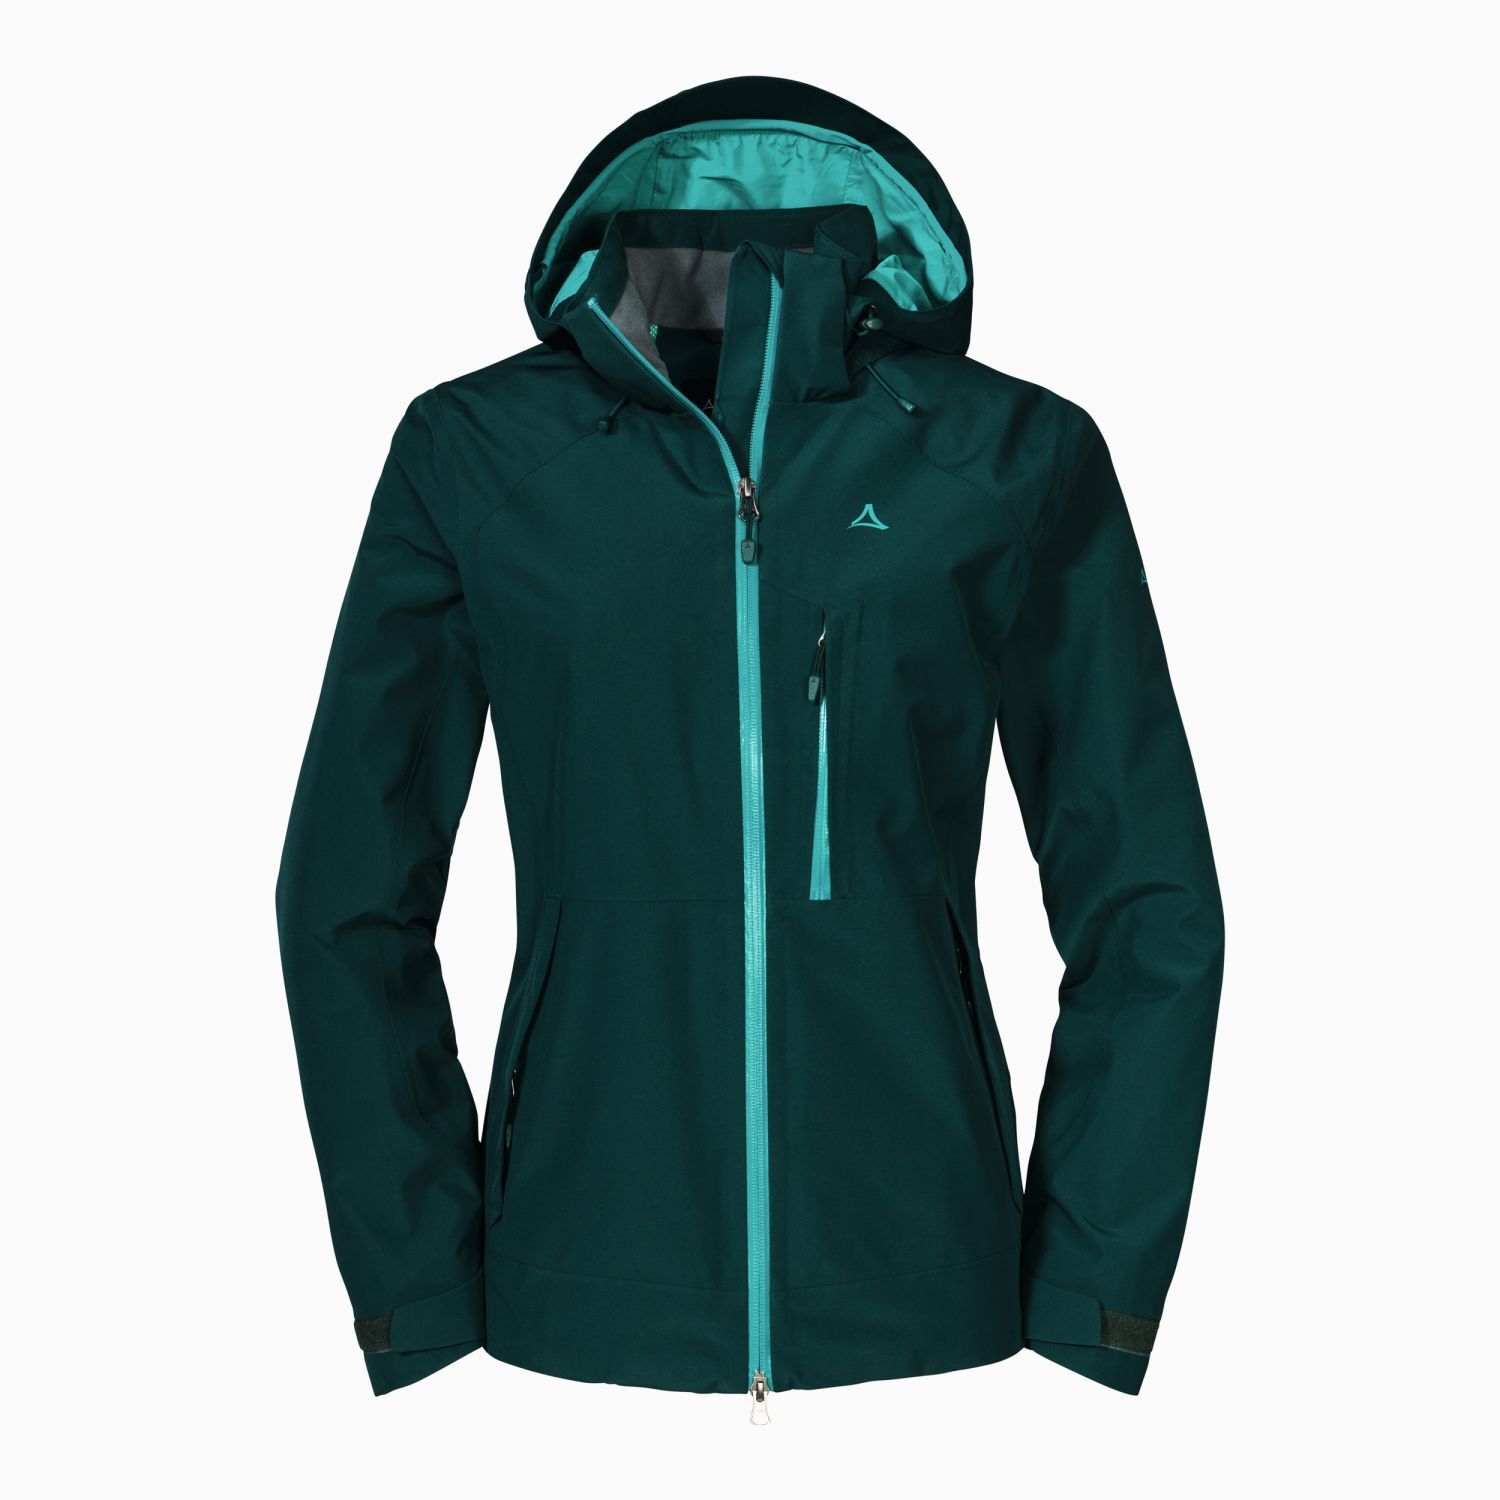 Schöffel Jacket Padon - Waterproof jacket - Women's